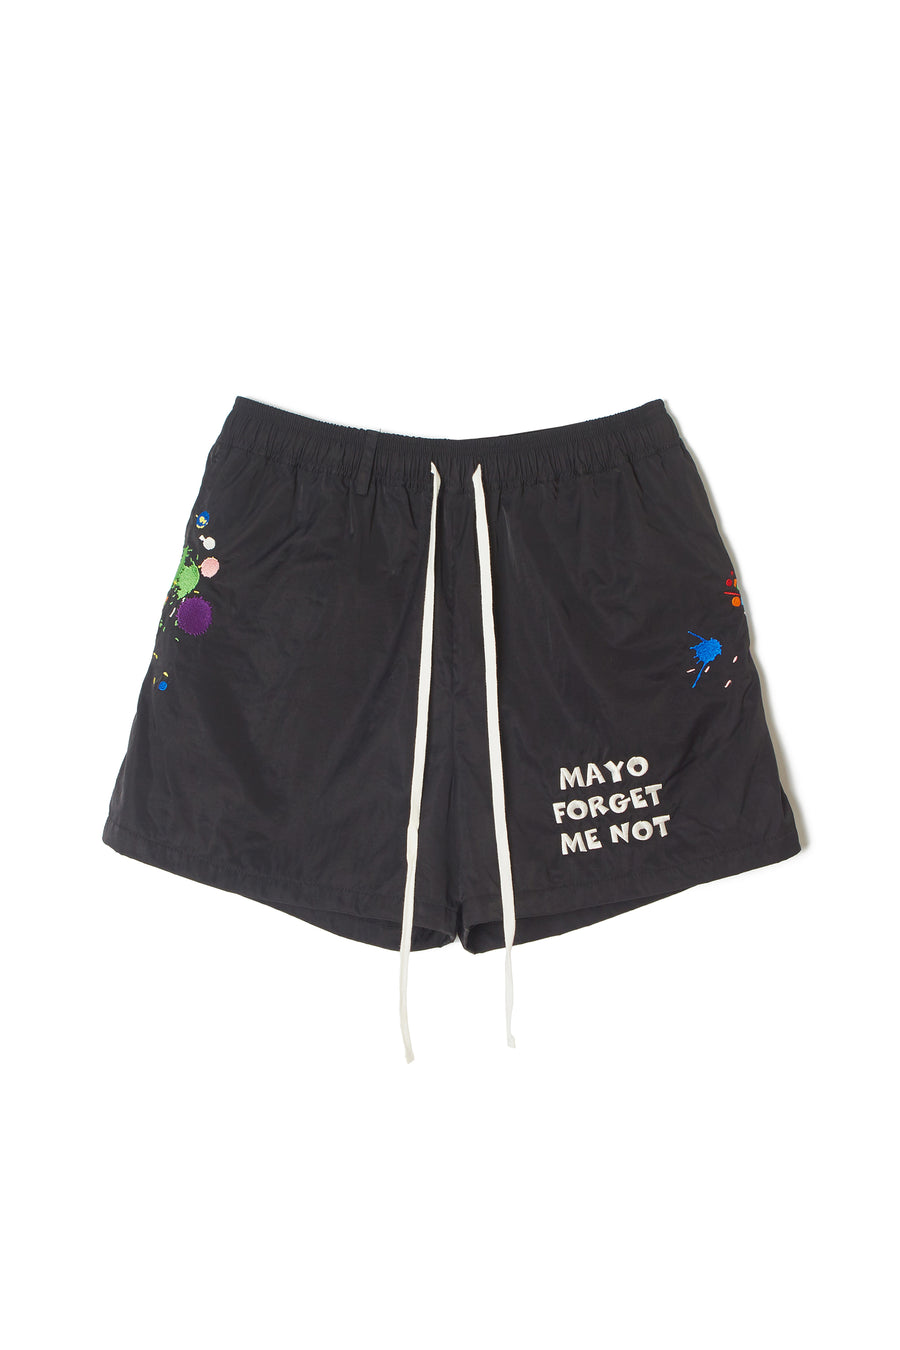 MAYO PAINT Embroidery Swim Shorts - BLACK